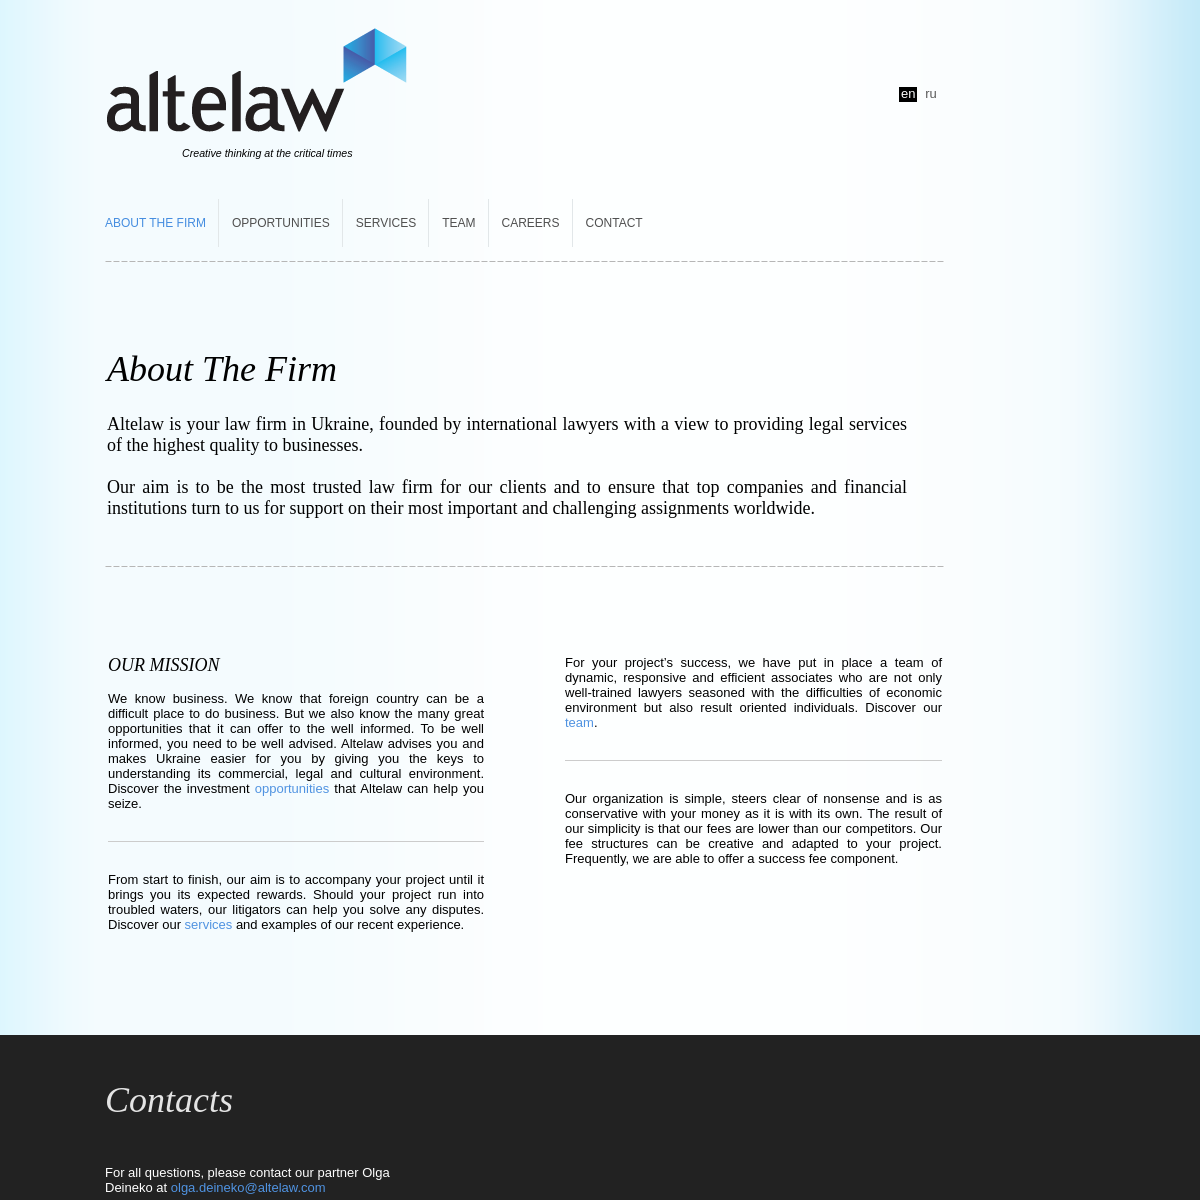 A complete backup of altelaw.com